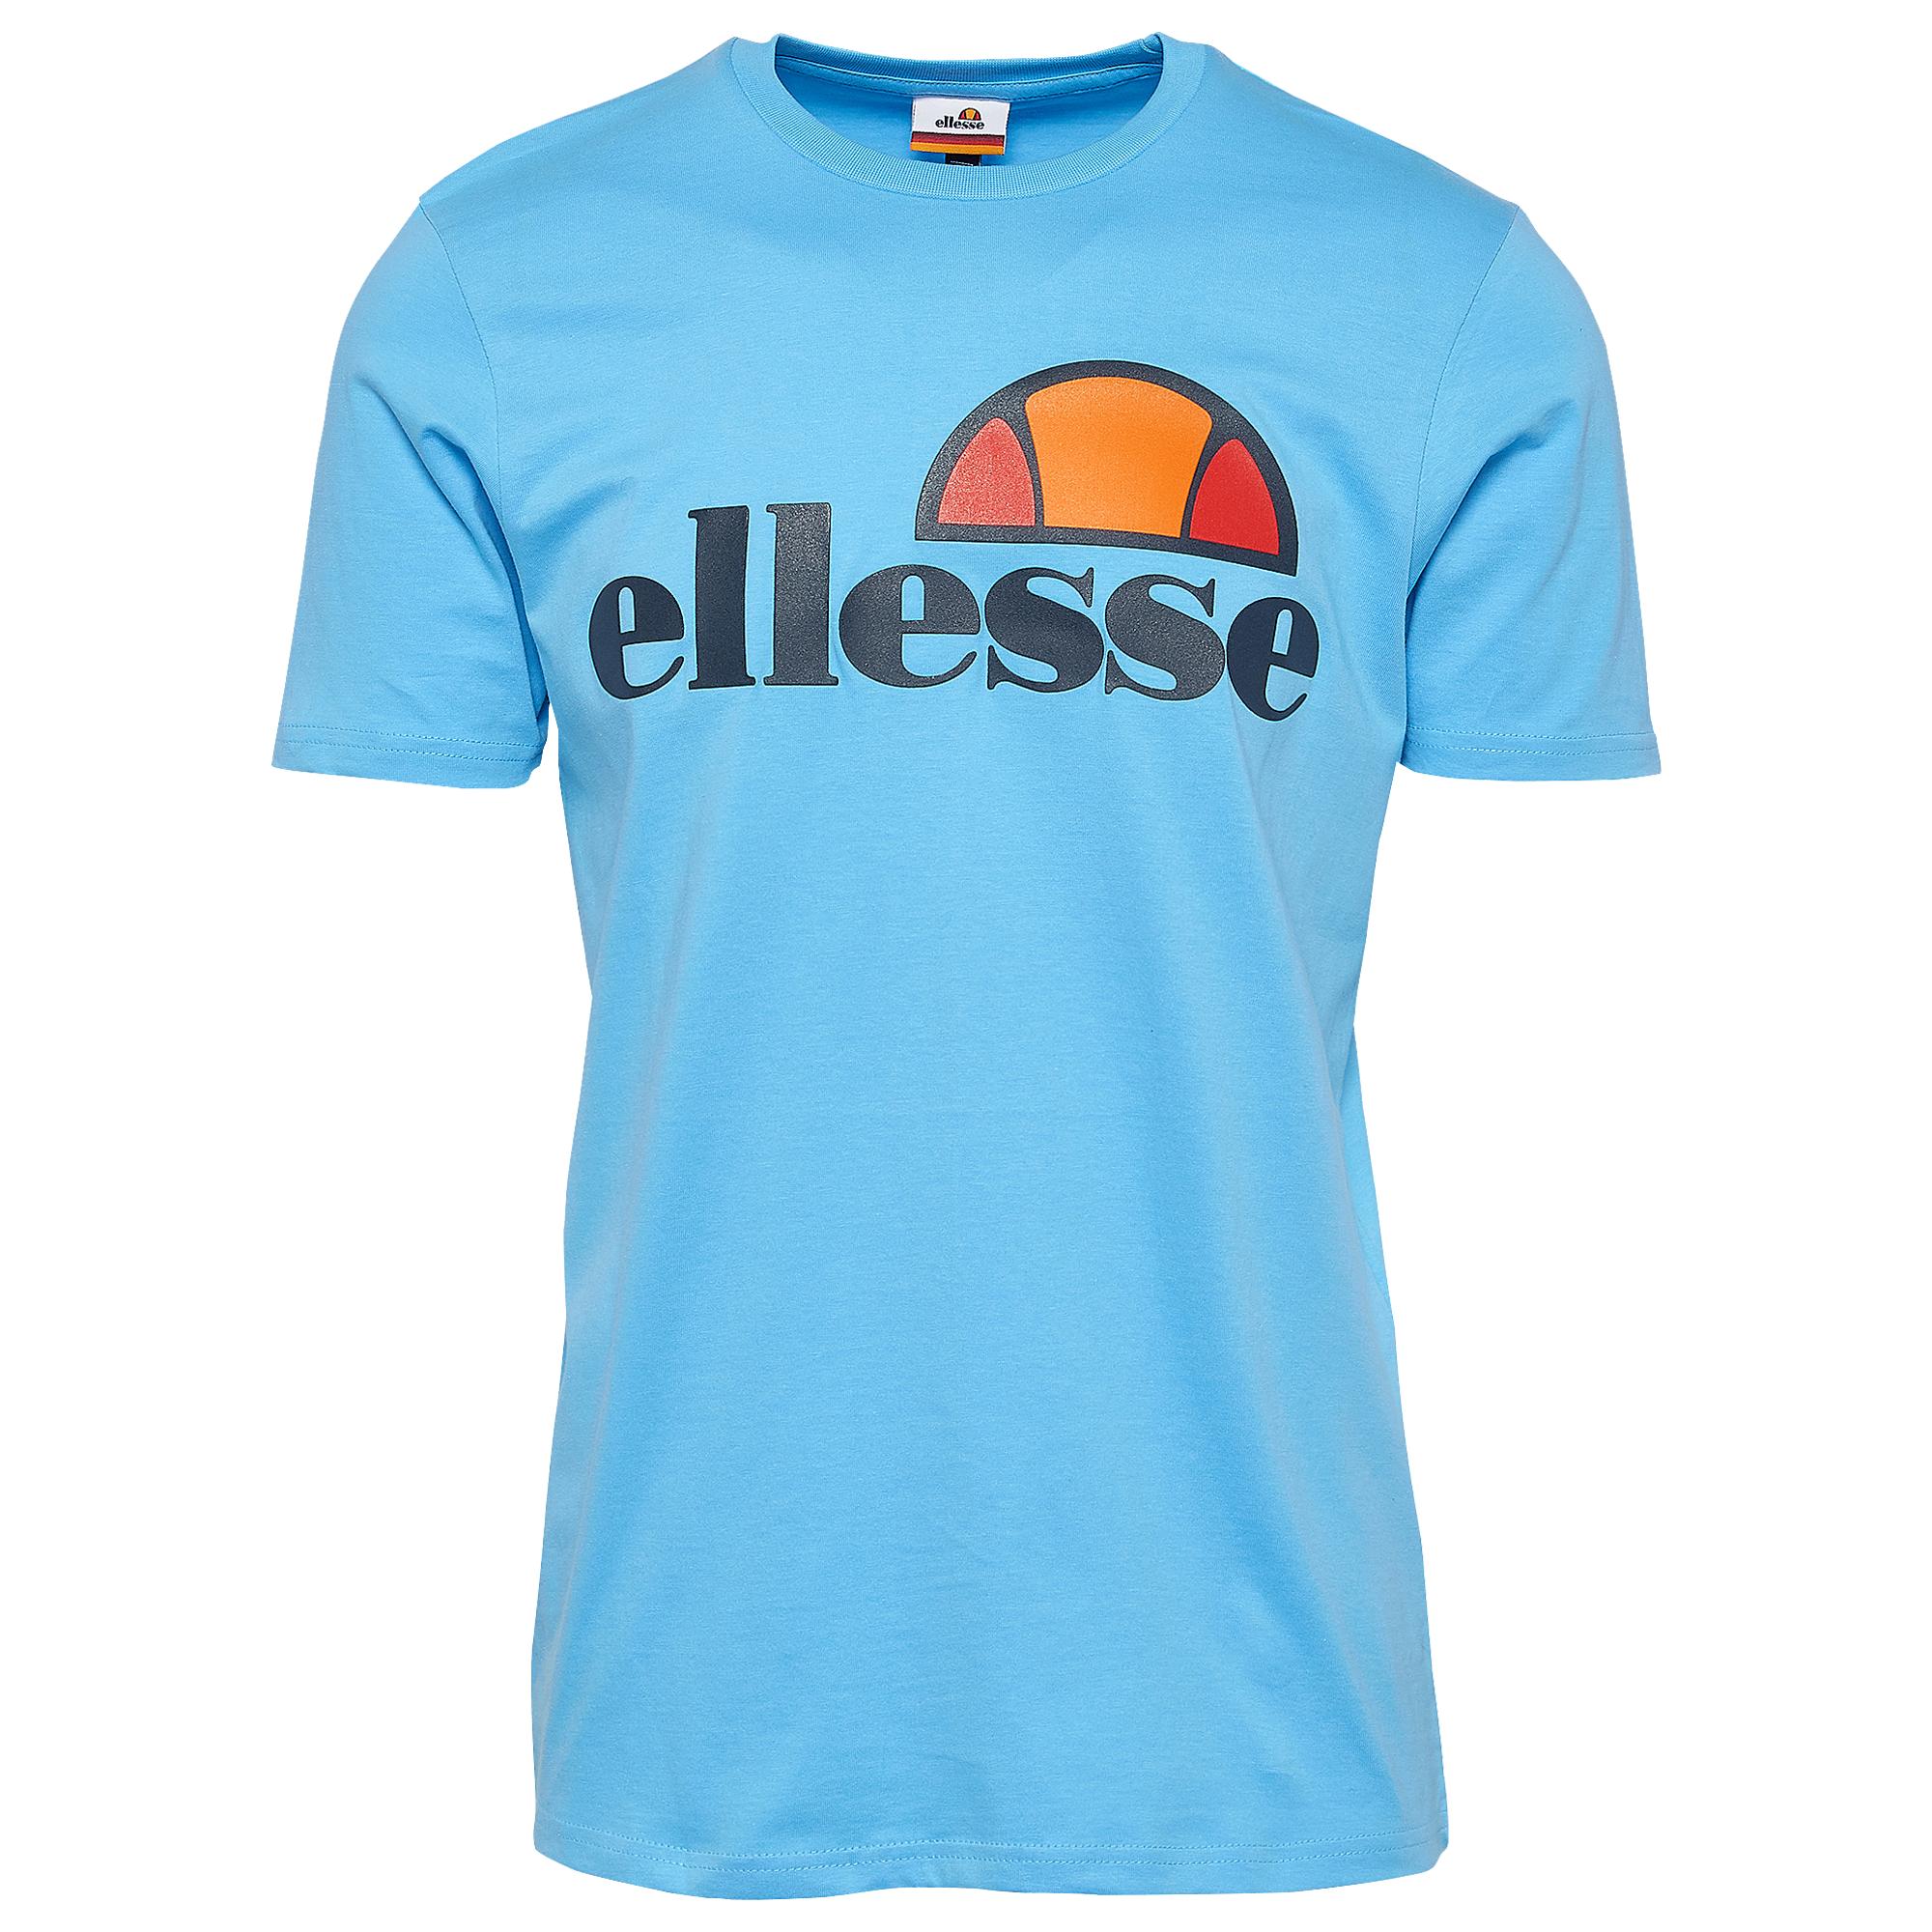 Ellesse Cotton Vettorio T-shirt in Blue/Navy (Blue) - Lyst